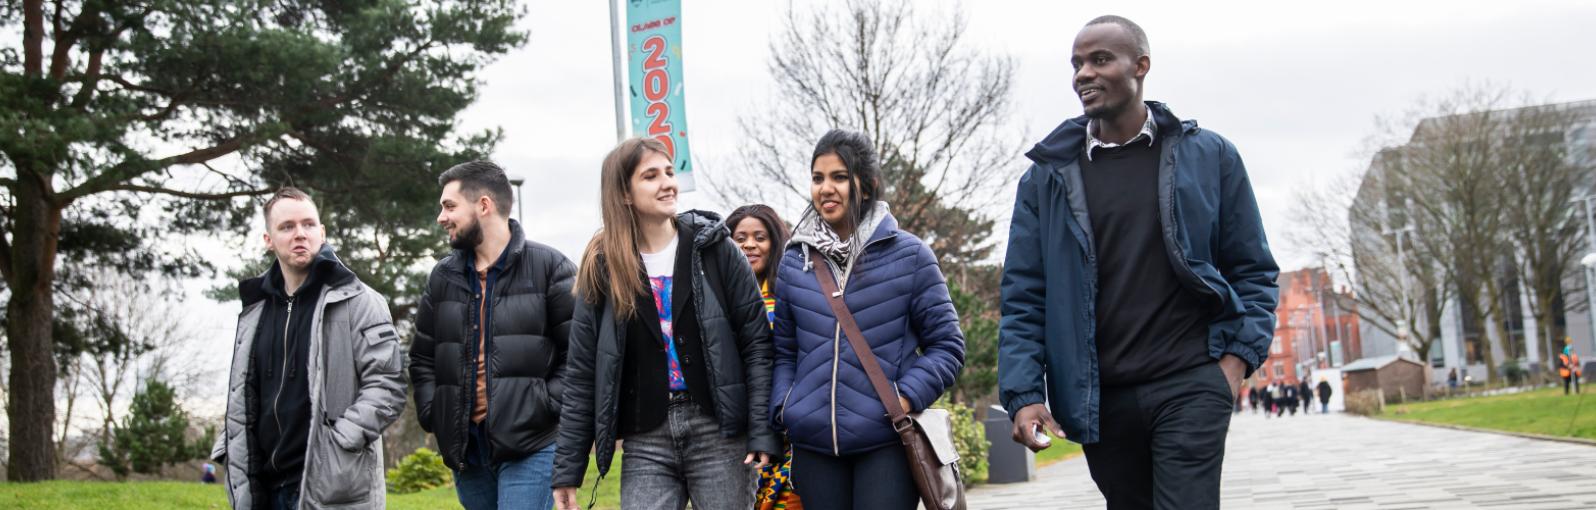 Salford International students walking together